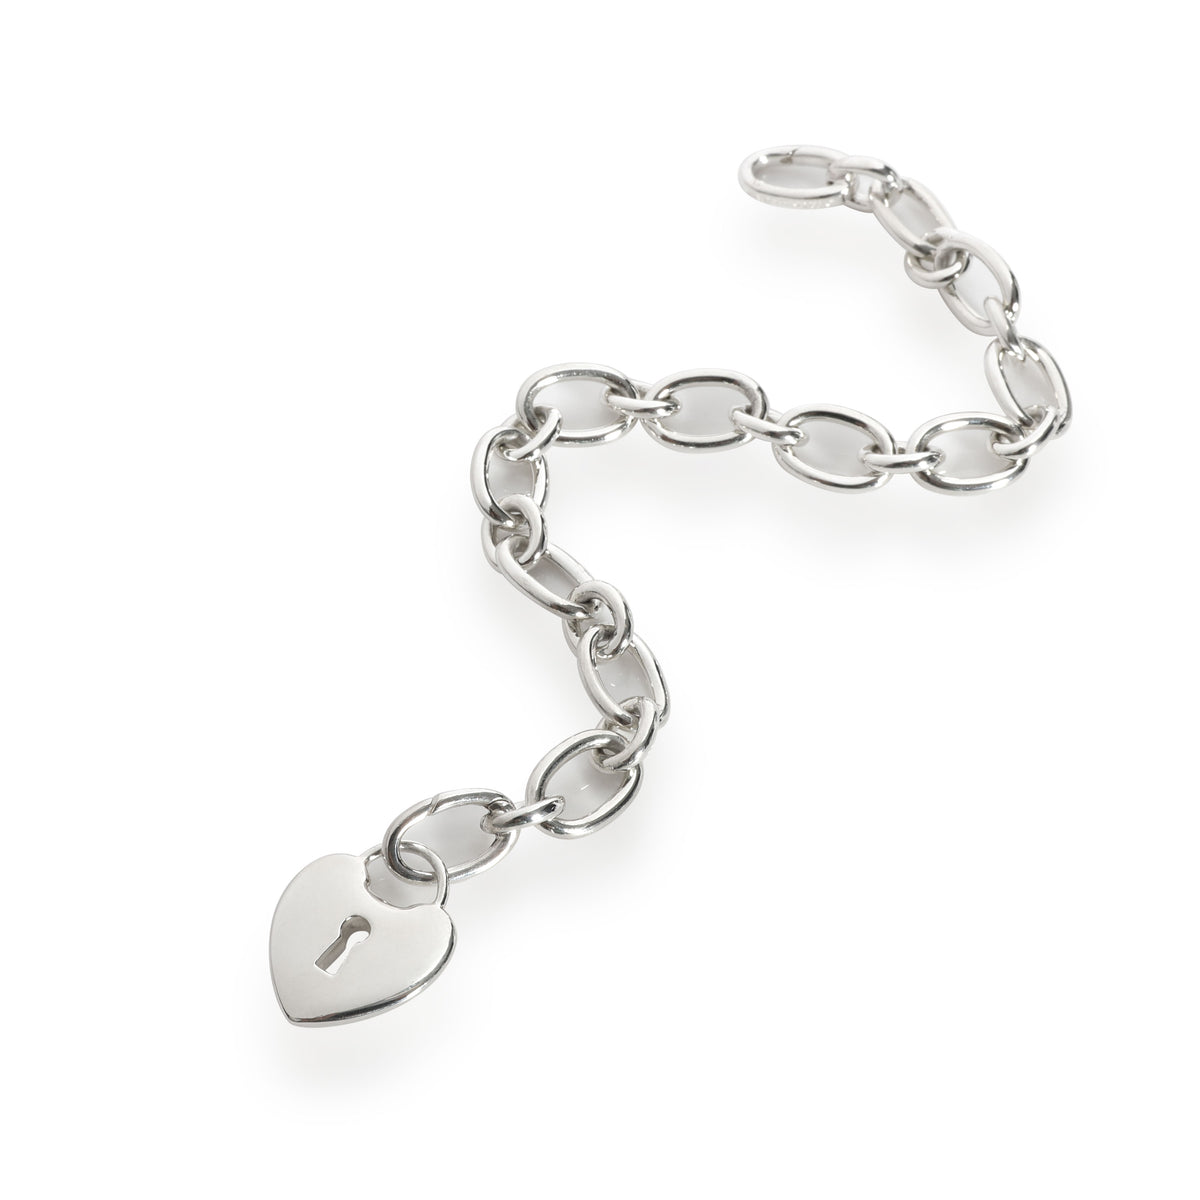 Zales Stainless Steel Heart Lock Bracelet with Yellow IP Screws - 7.5